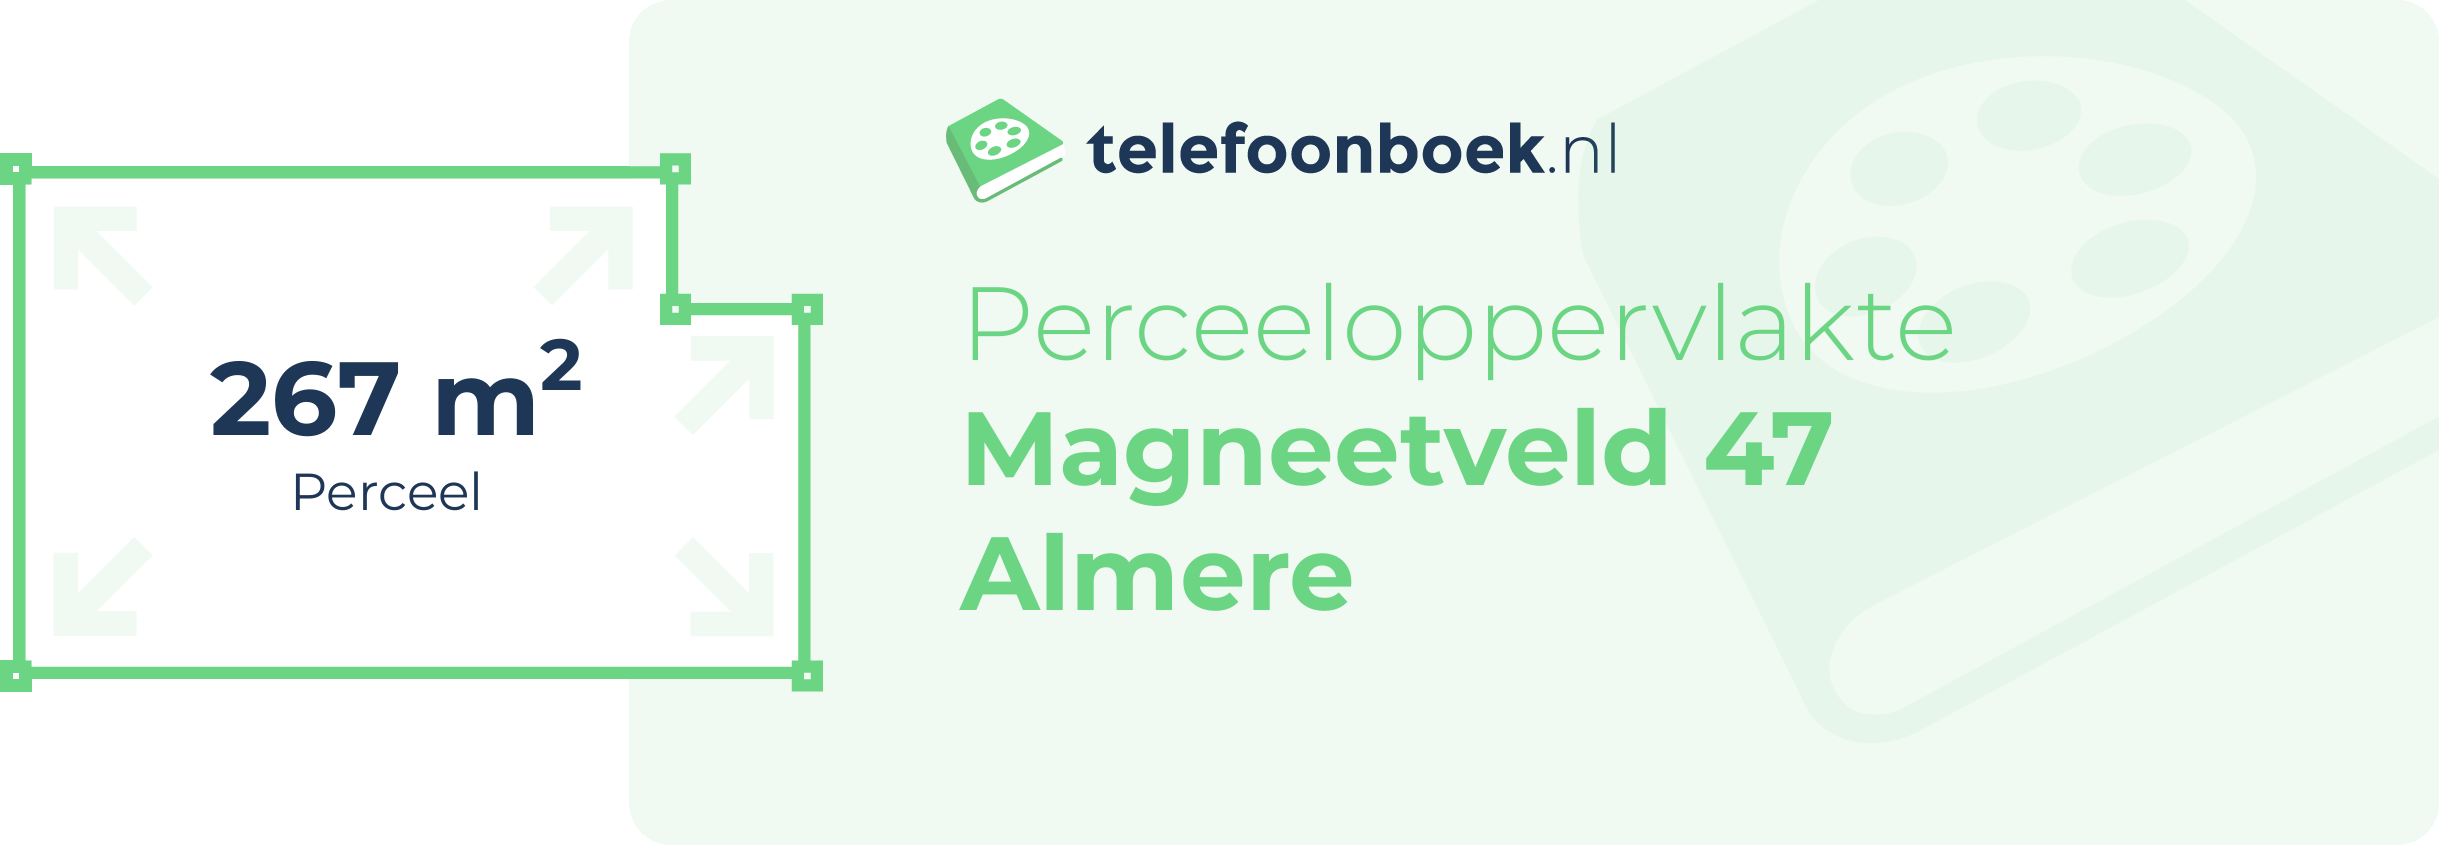 Perceeloppervlakte Magneetveld 47 Almere